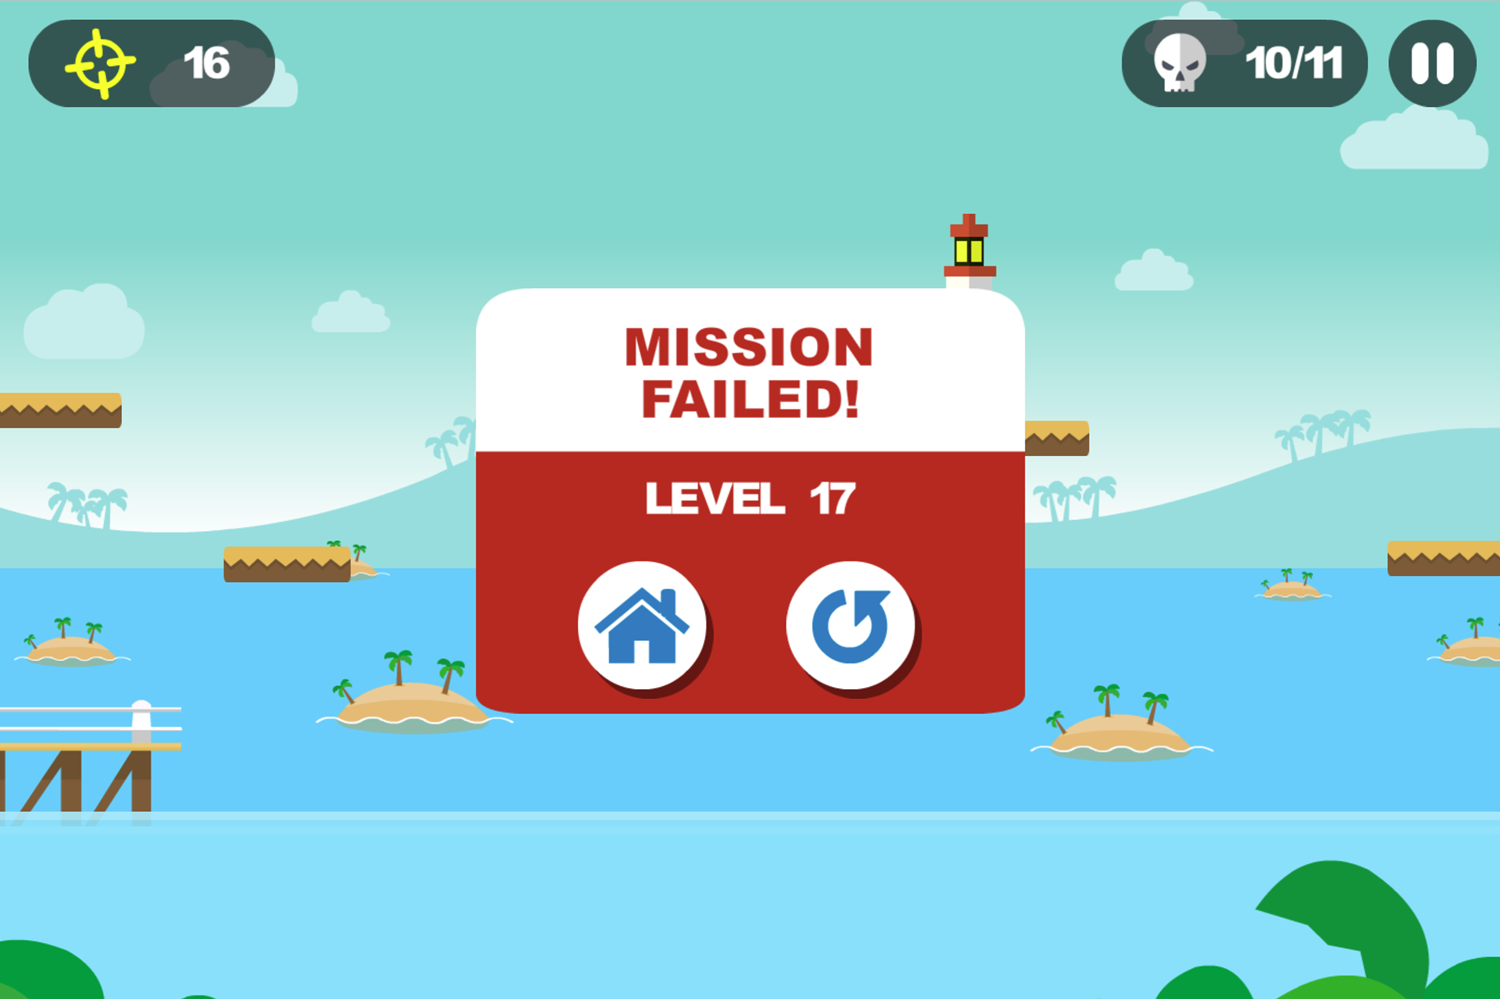 Risky Mission Game Level Failed Screen Screenshot.